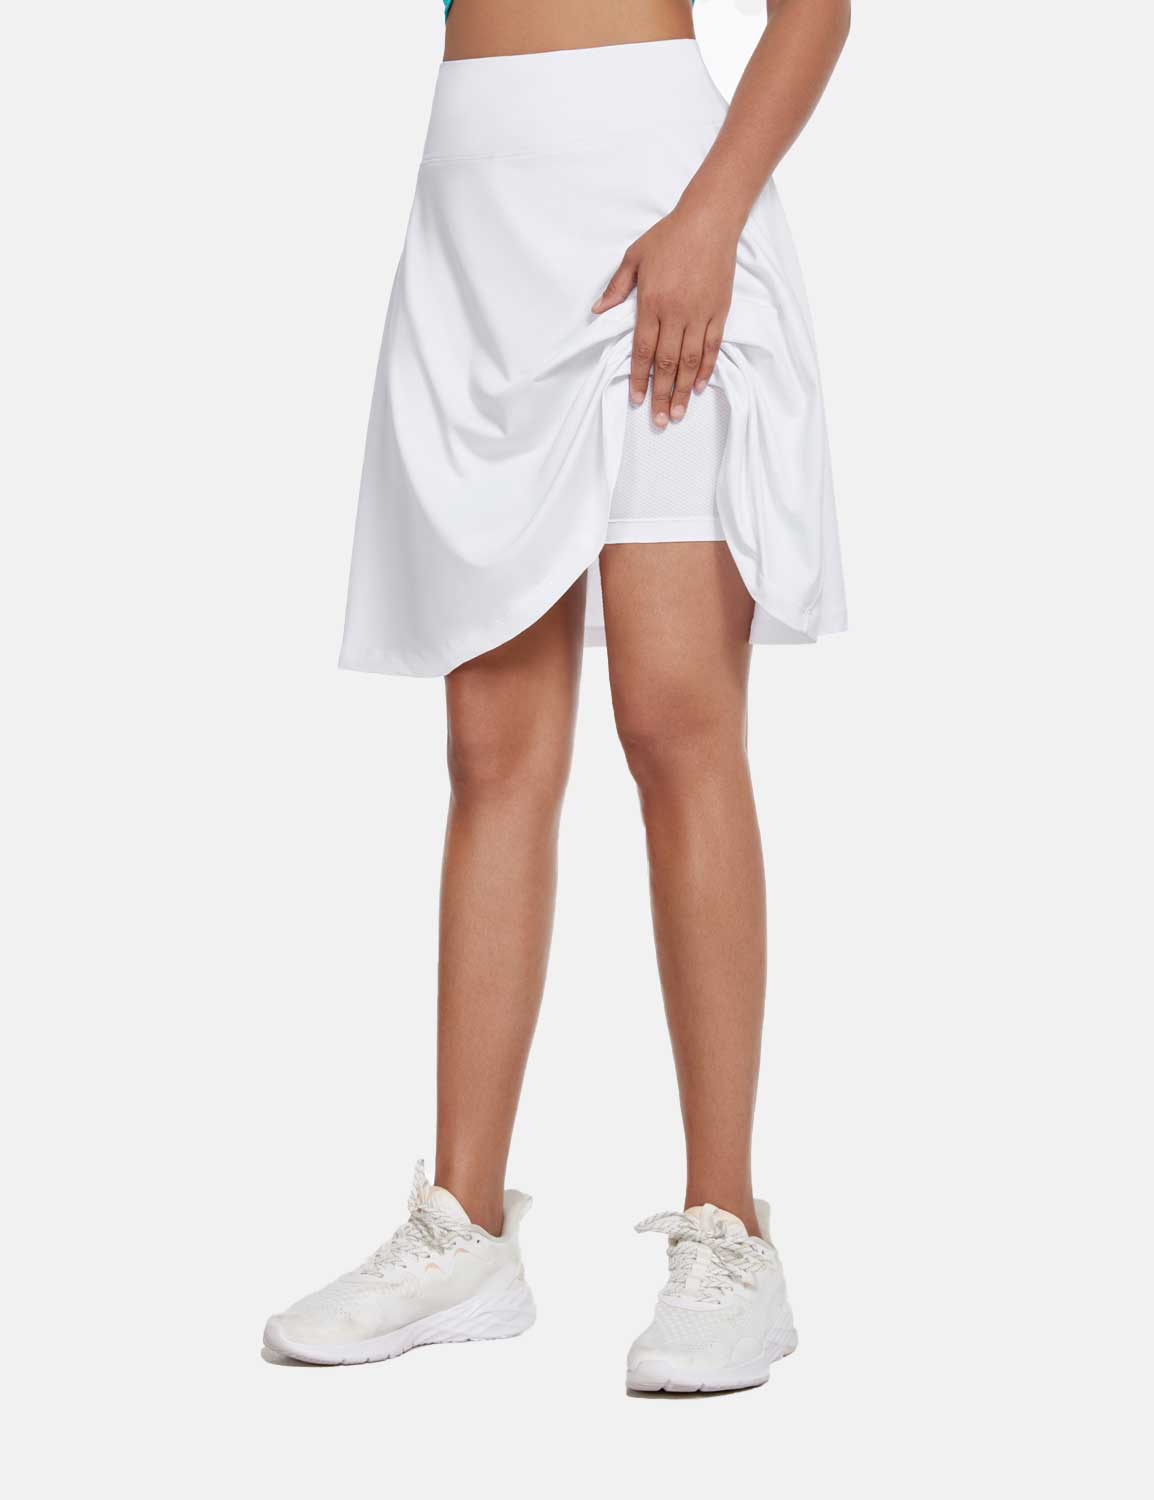 Baleaf Women's UPF 50+ Knee Length Golf Skorts w Pockets White with Built-in Liner